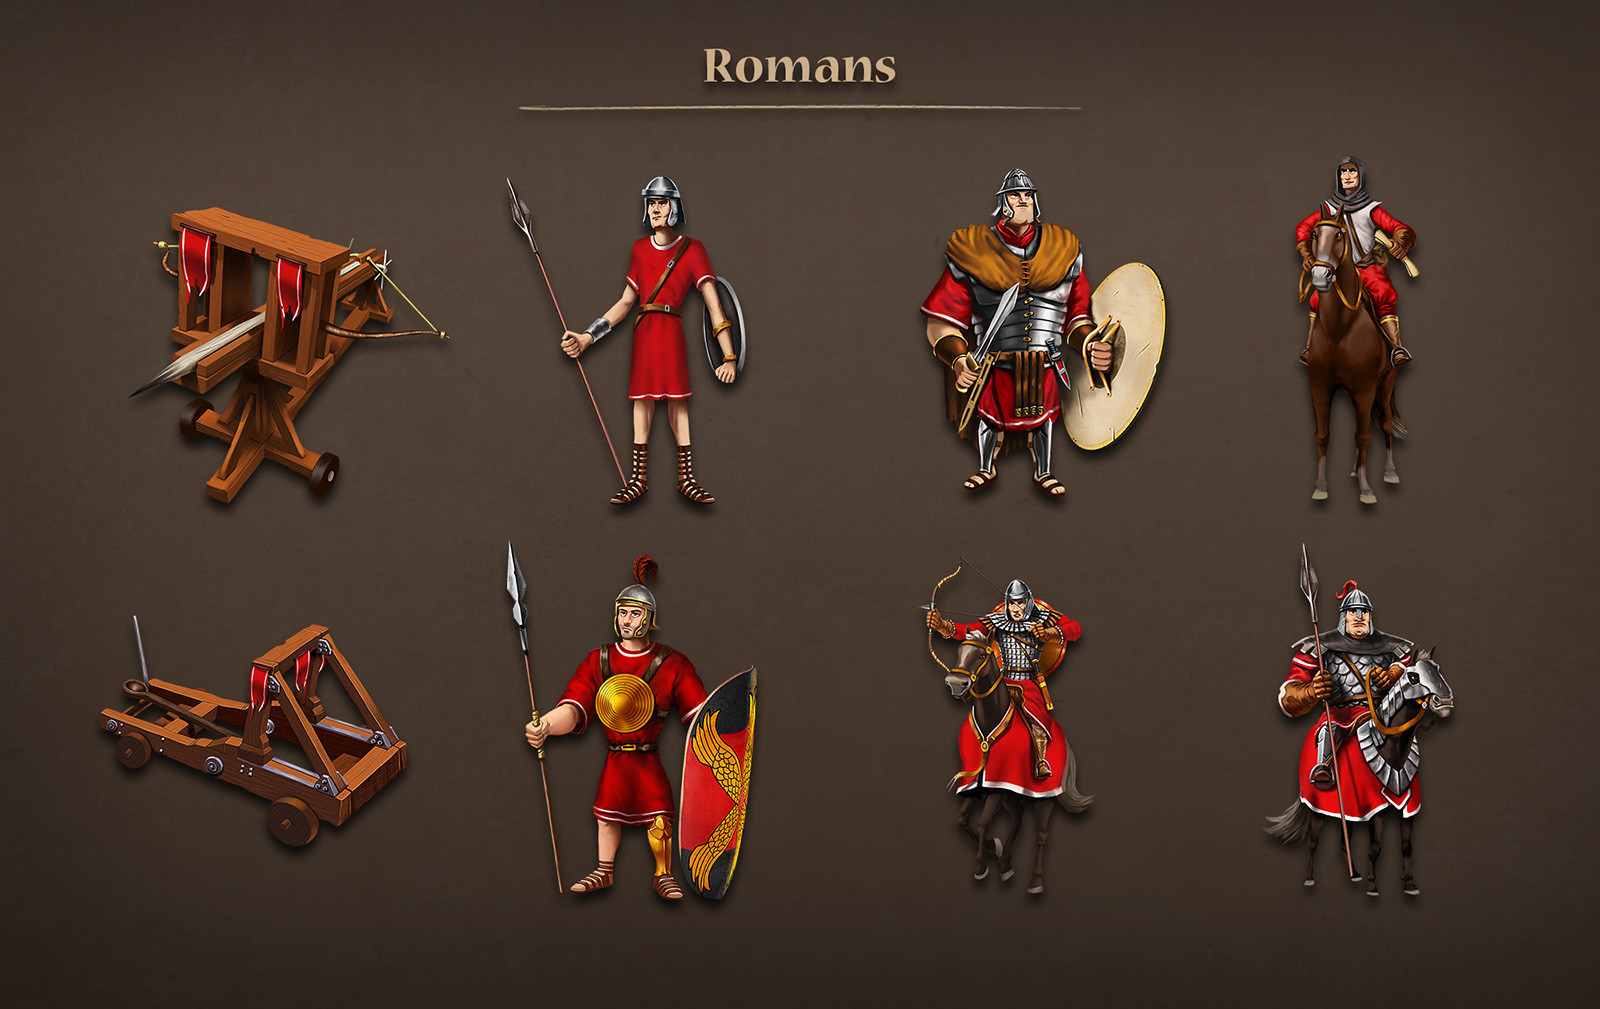 Roman units